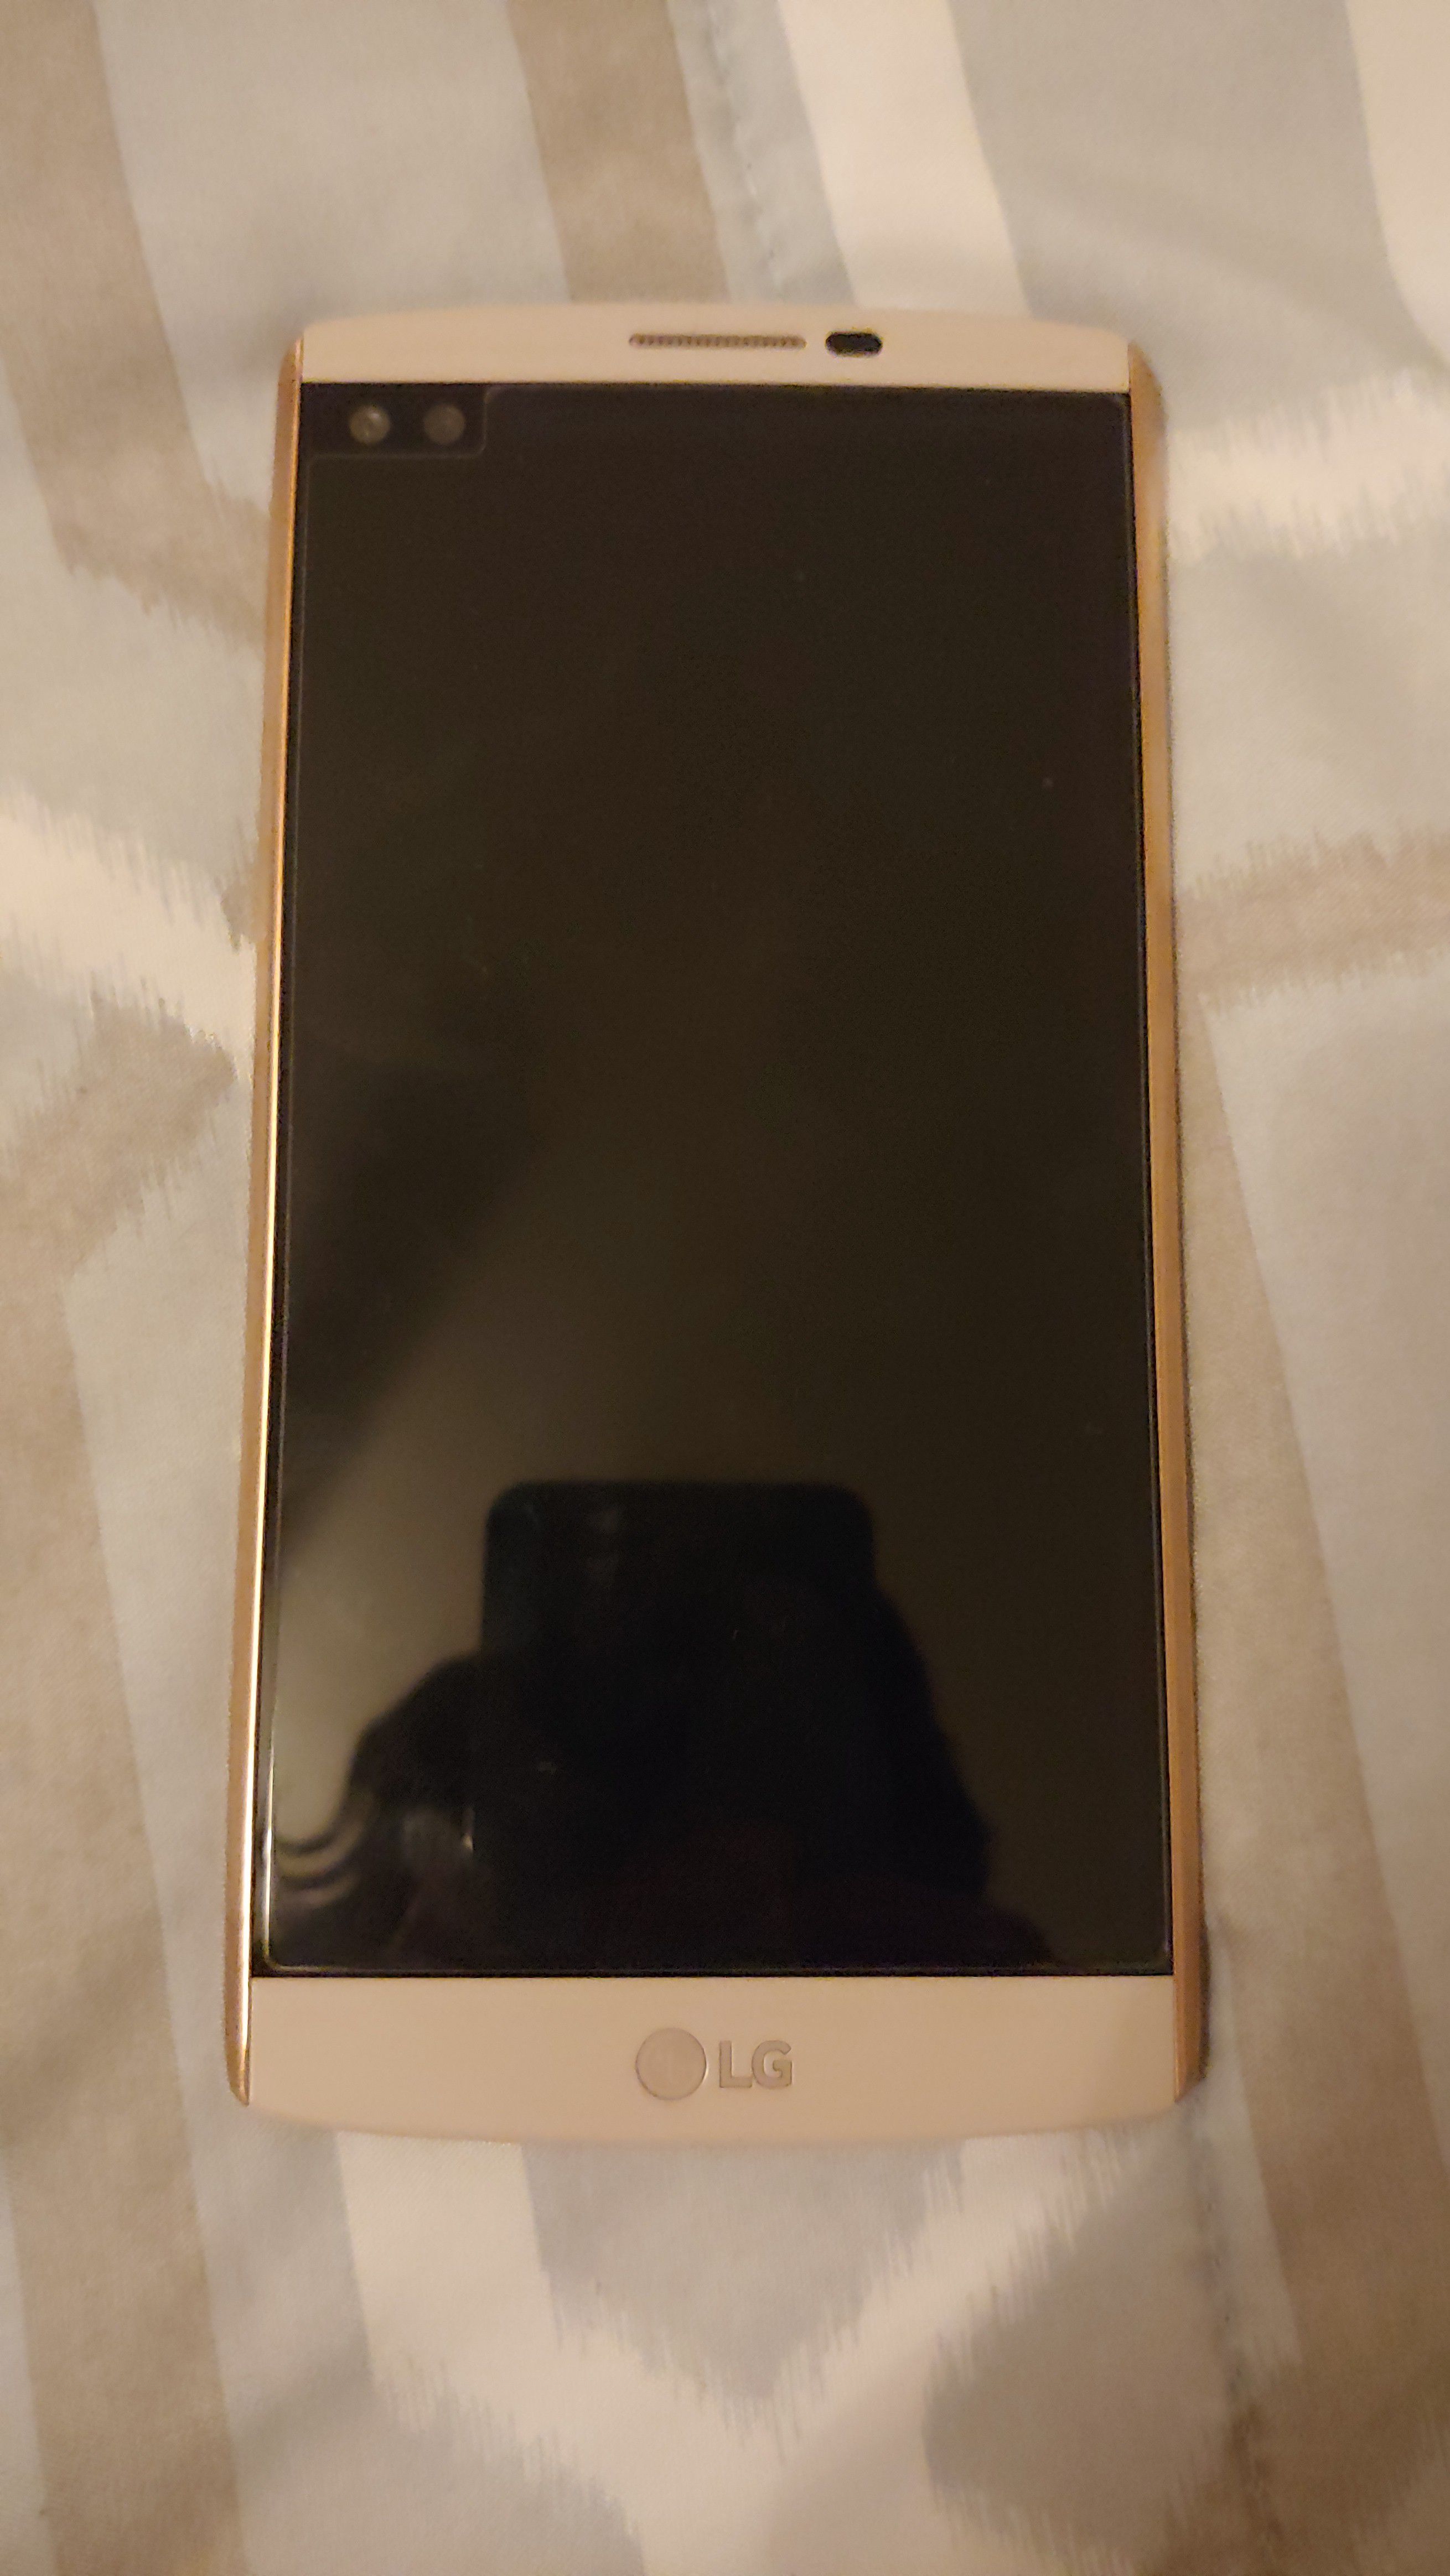 LG V10 Dual Sim 64GB unlocked (rose gold)